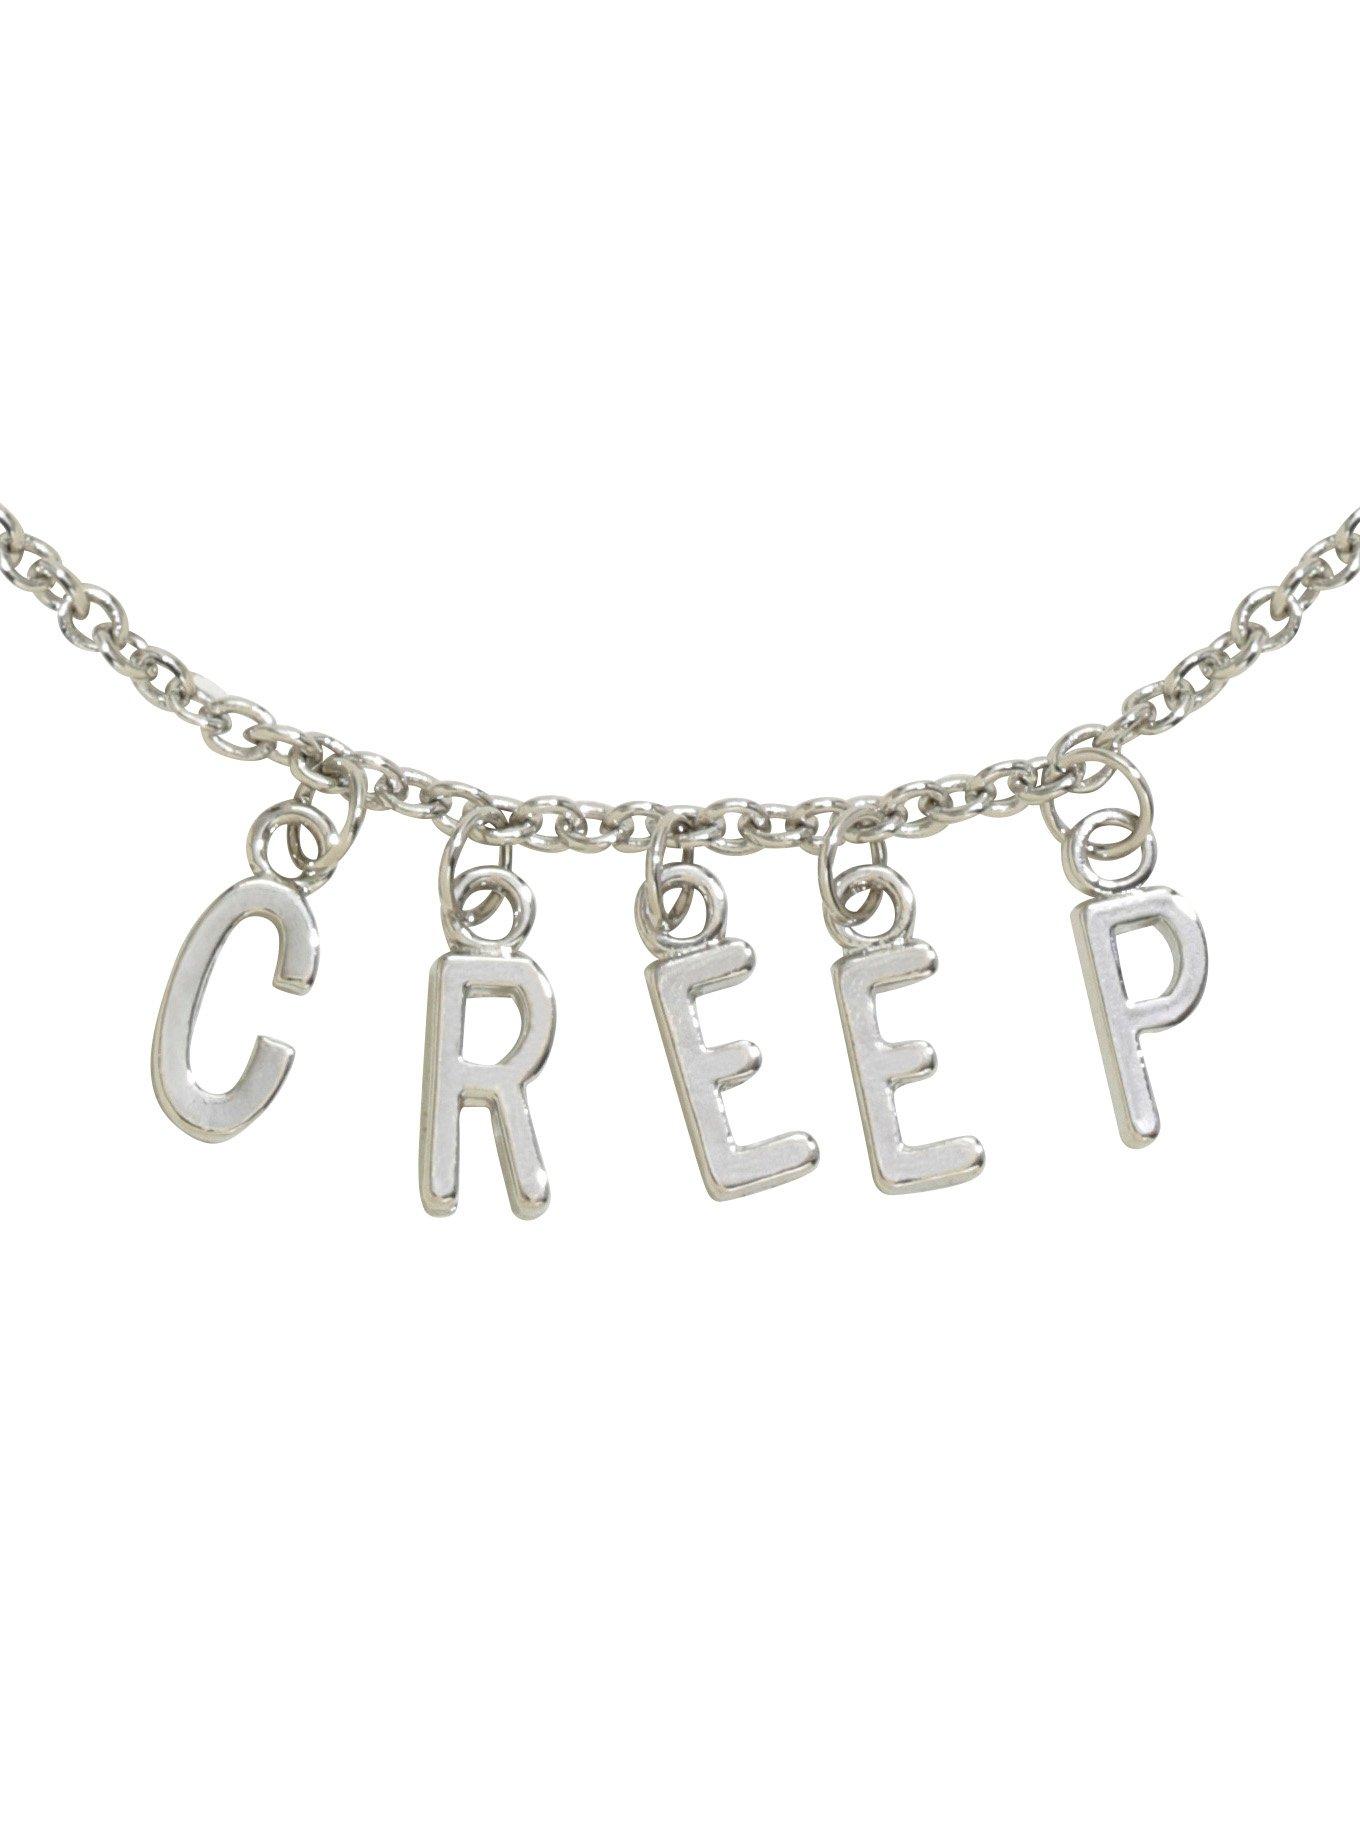 Blackheart Creep Hanging Letters Necklace, , hi-res